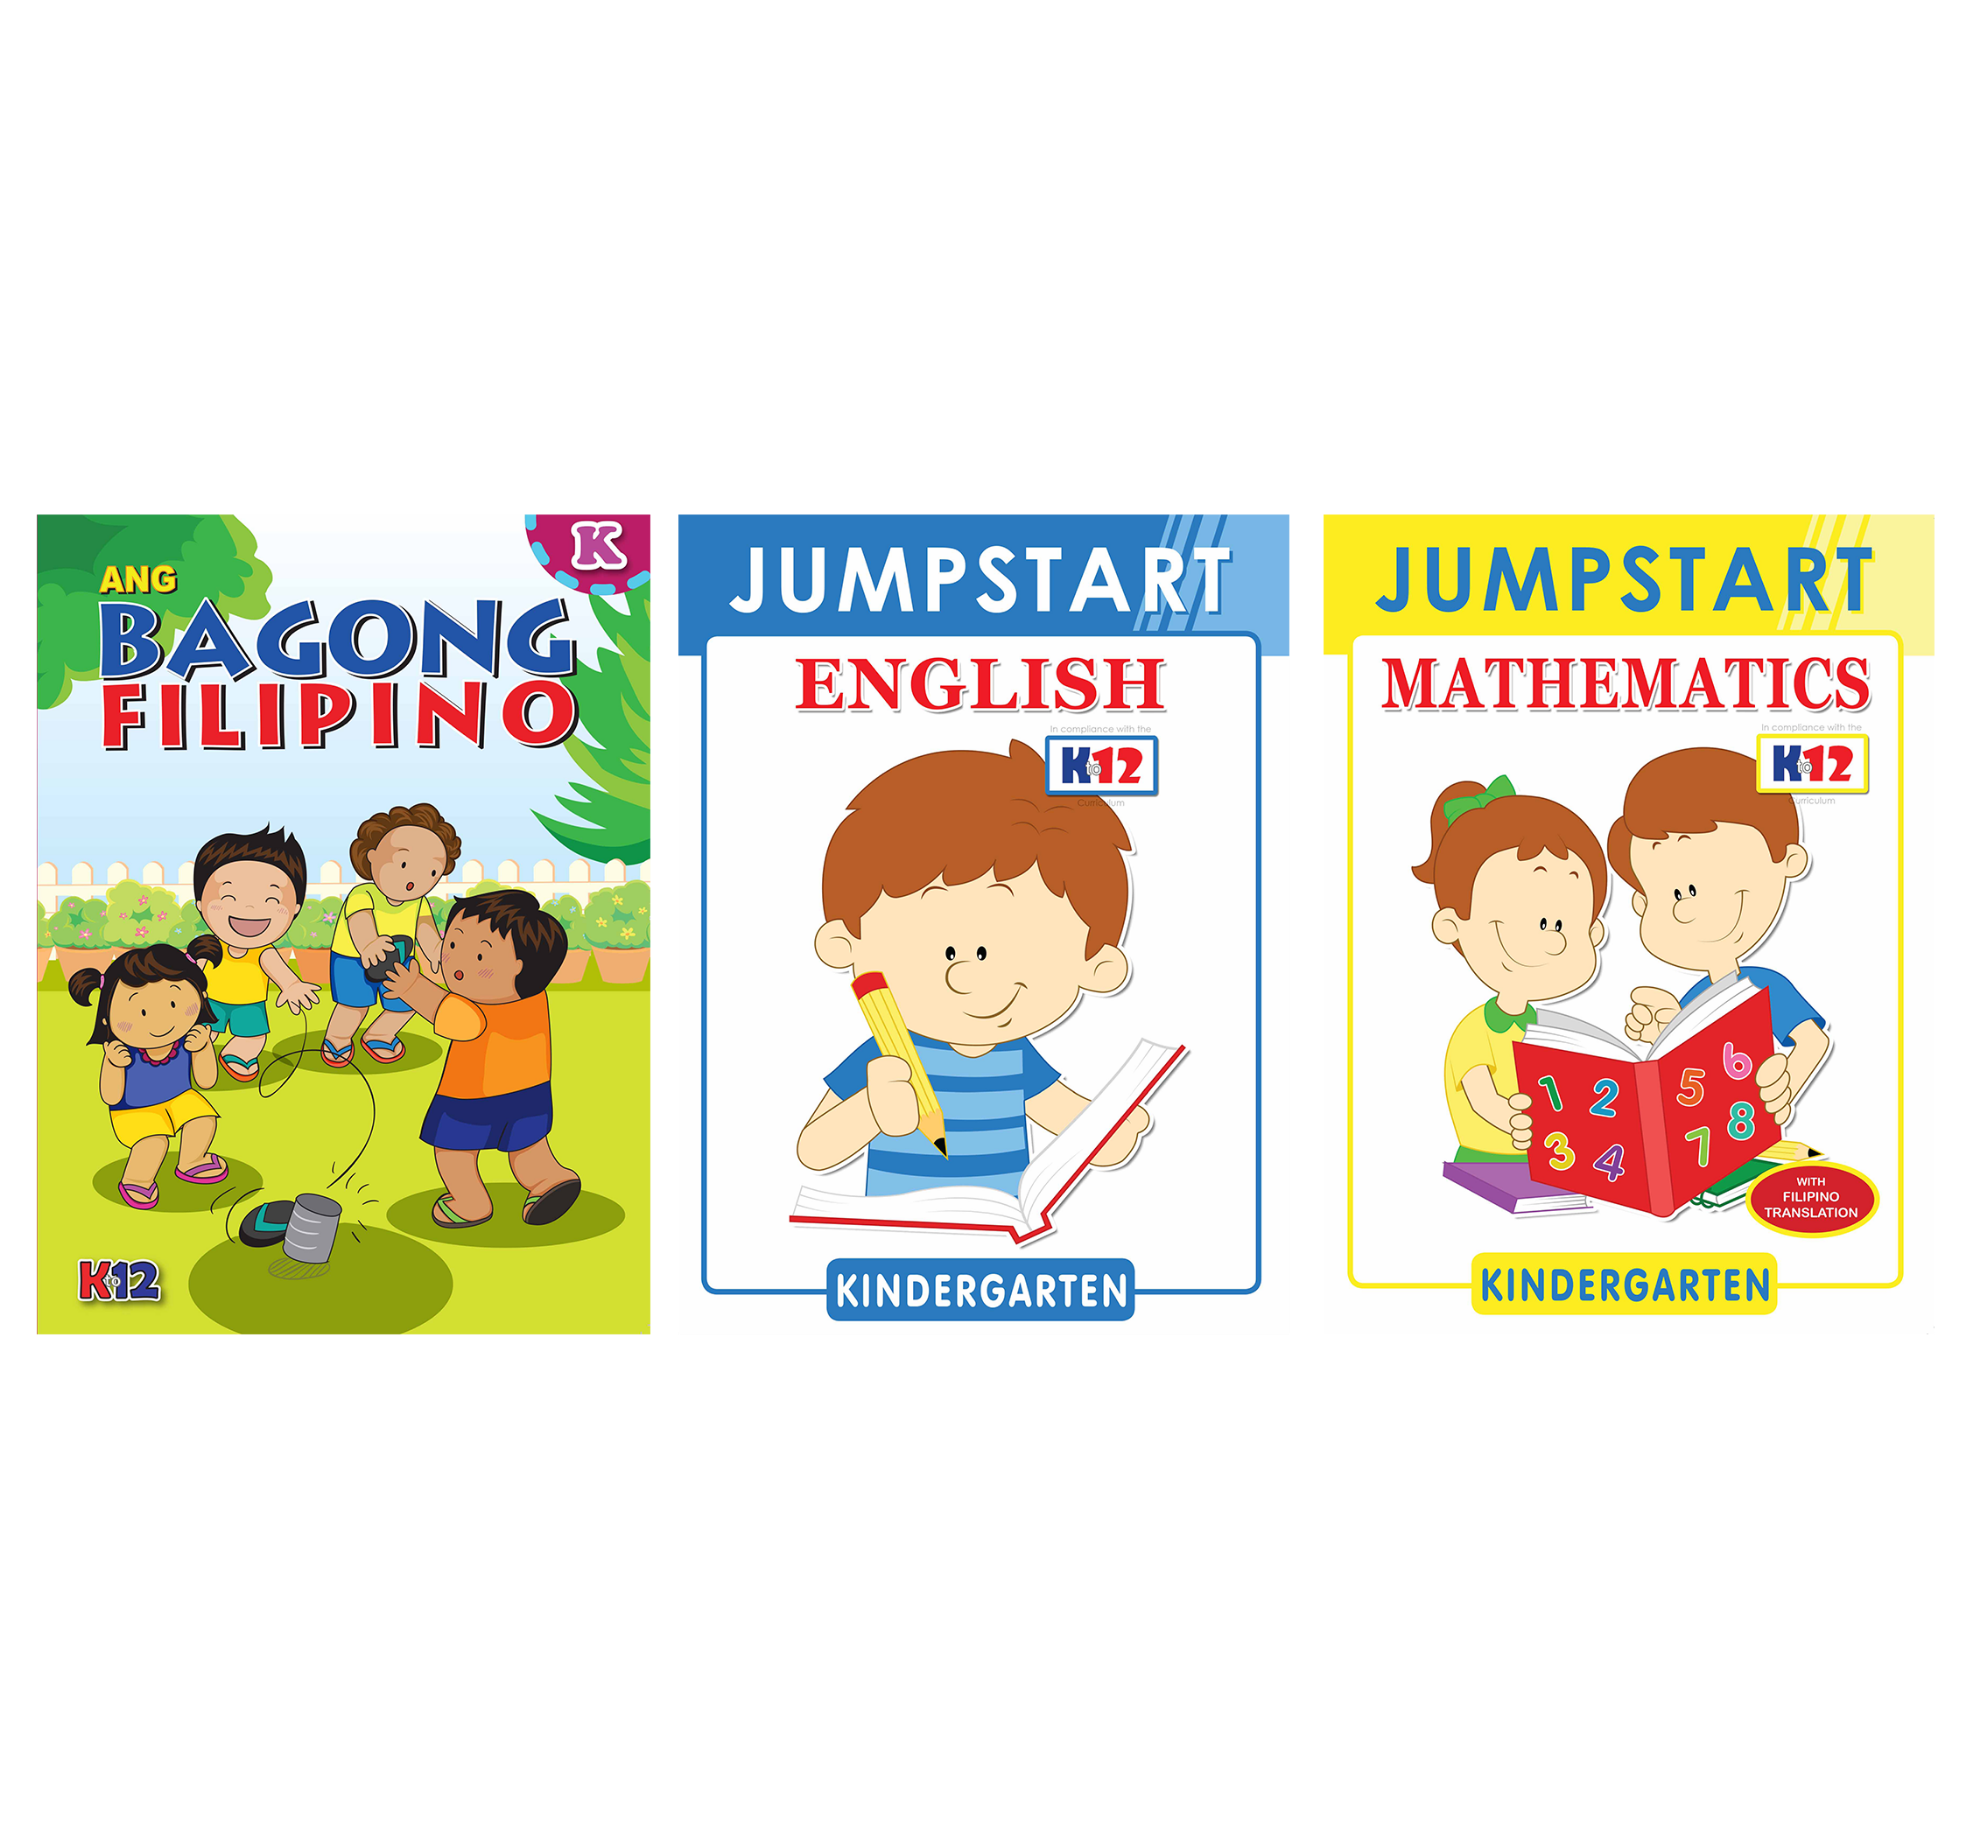 learning-is-fun-reg-ang-bagong-filipino-jumpstart-english-math-kindergarten-set-of-3